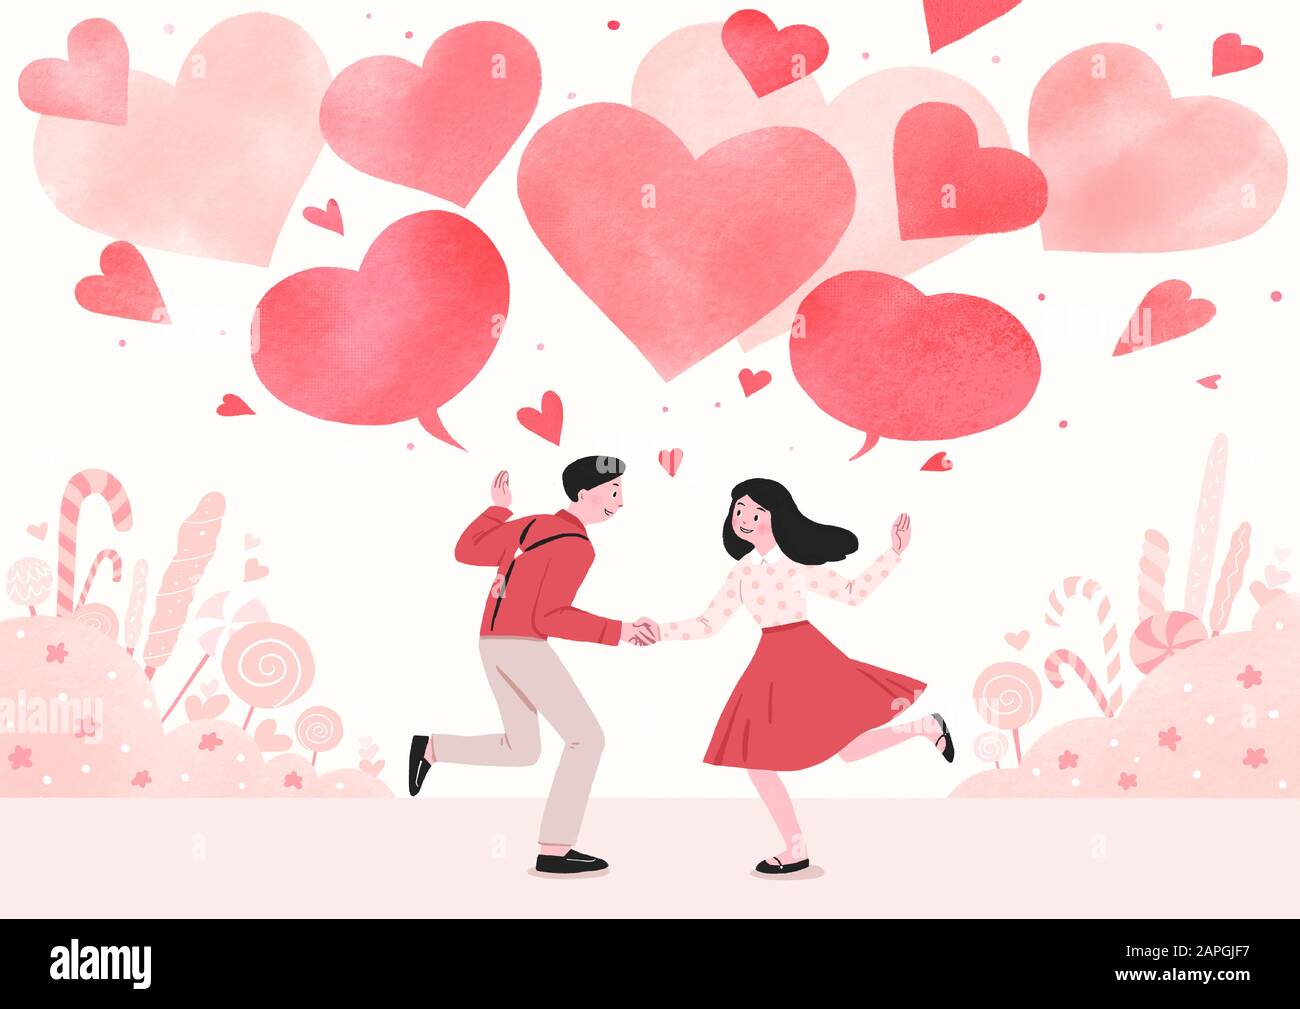 Romantic Relations, Loving happy couple illustration 001 Stock Vector